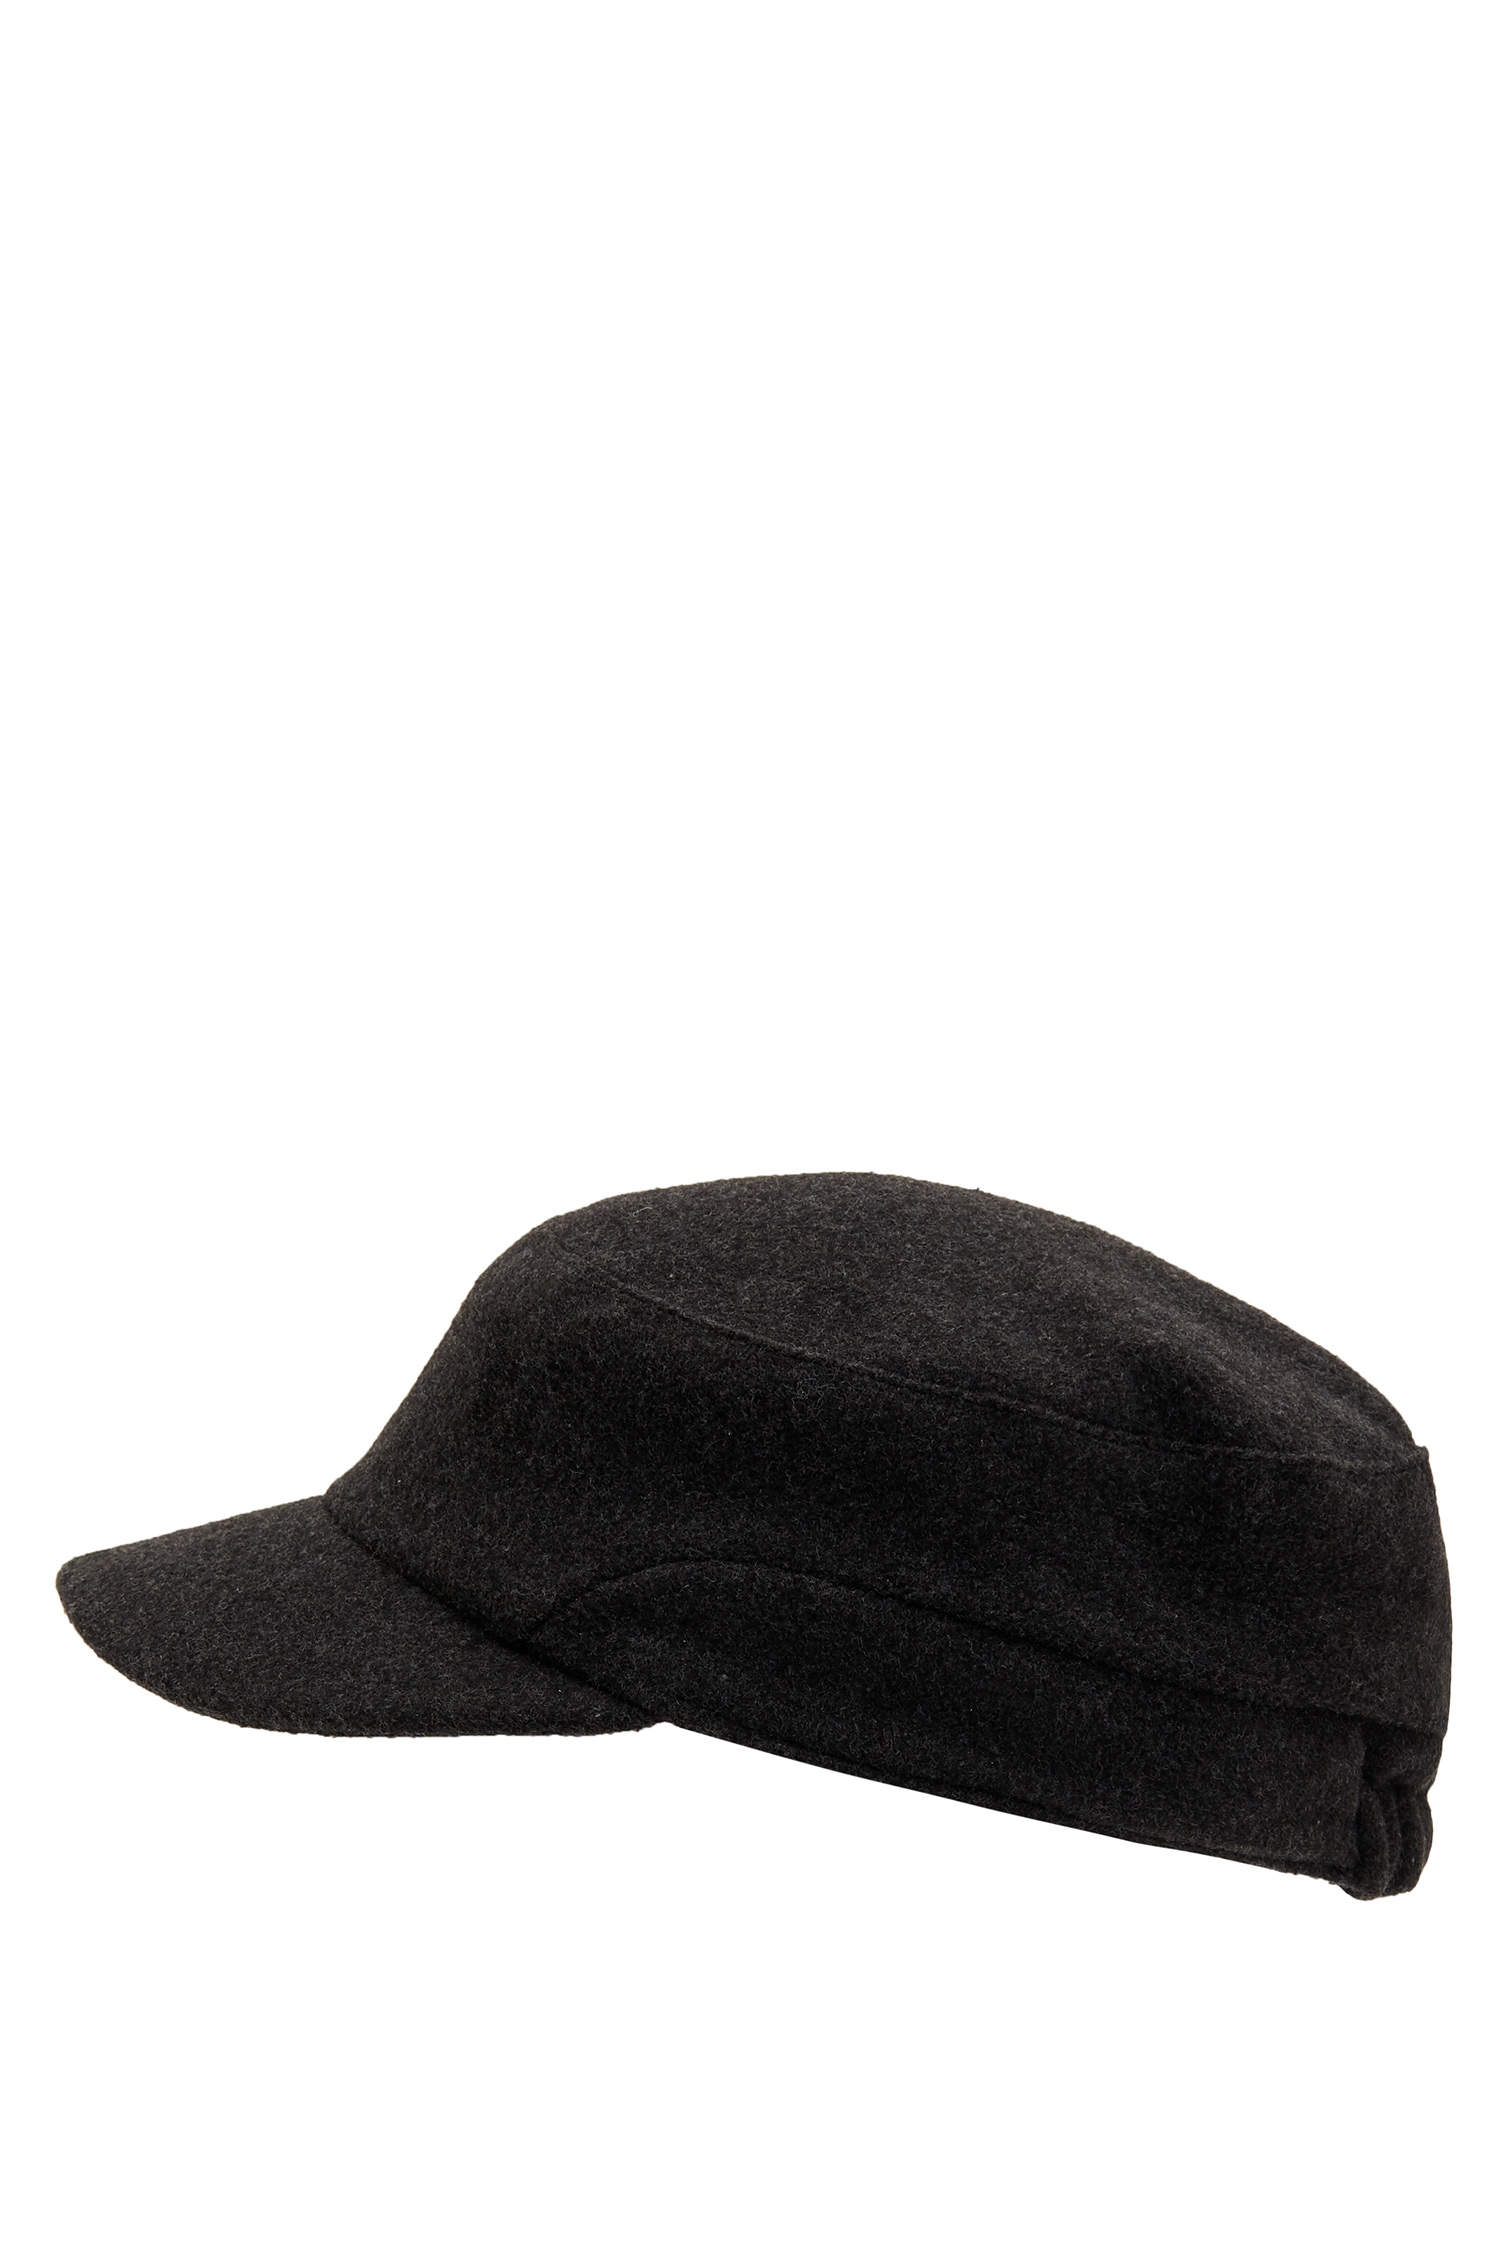 Defacto Erkek Kışlık Cap Şapka. 2